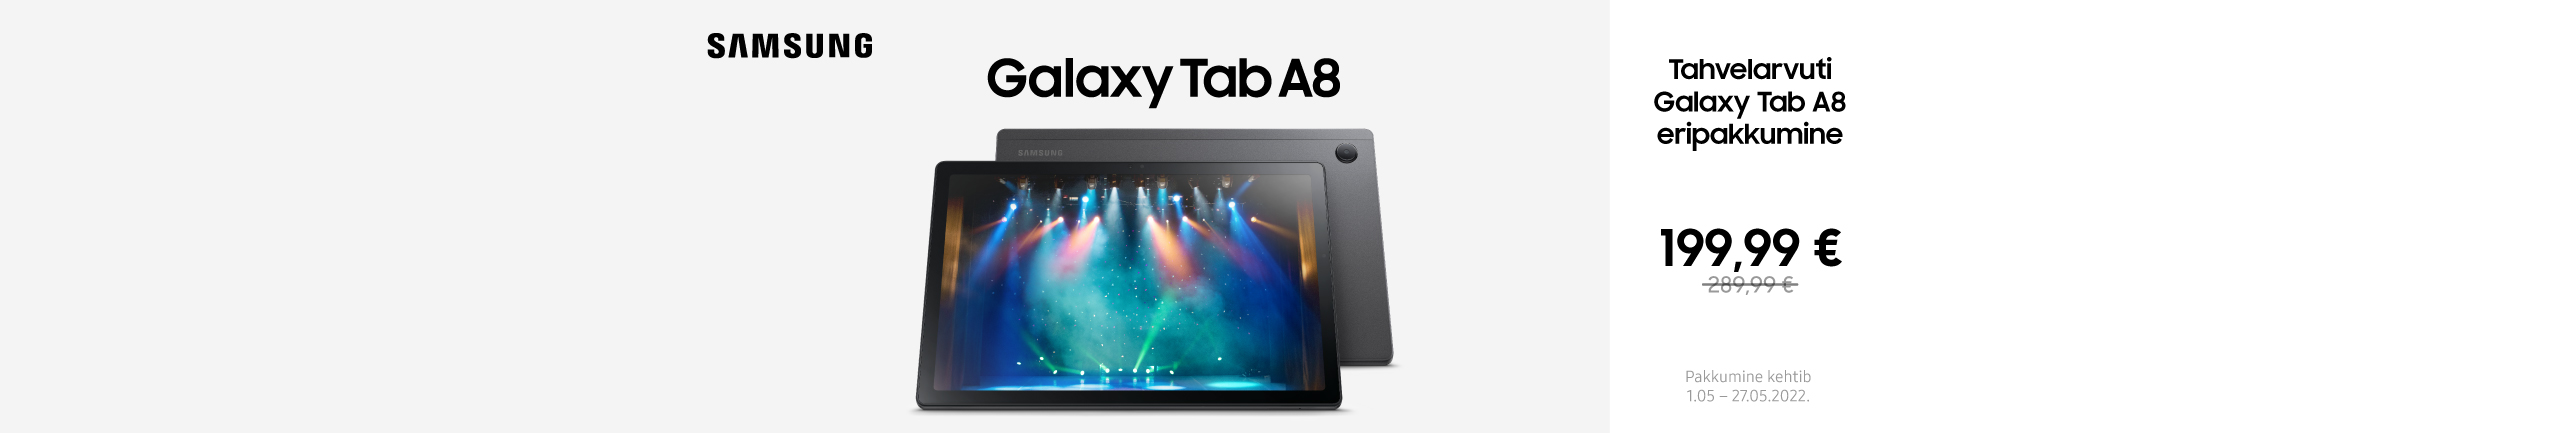 Samsung Galaxy Tab A8 eripakkumine